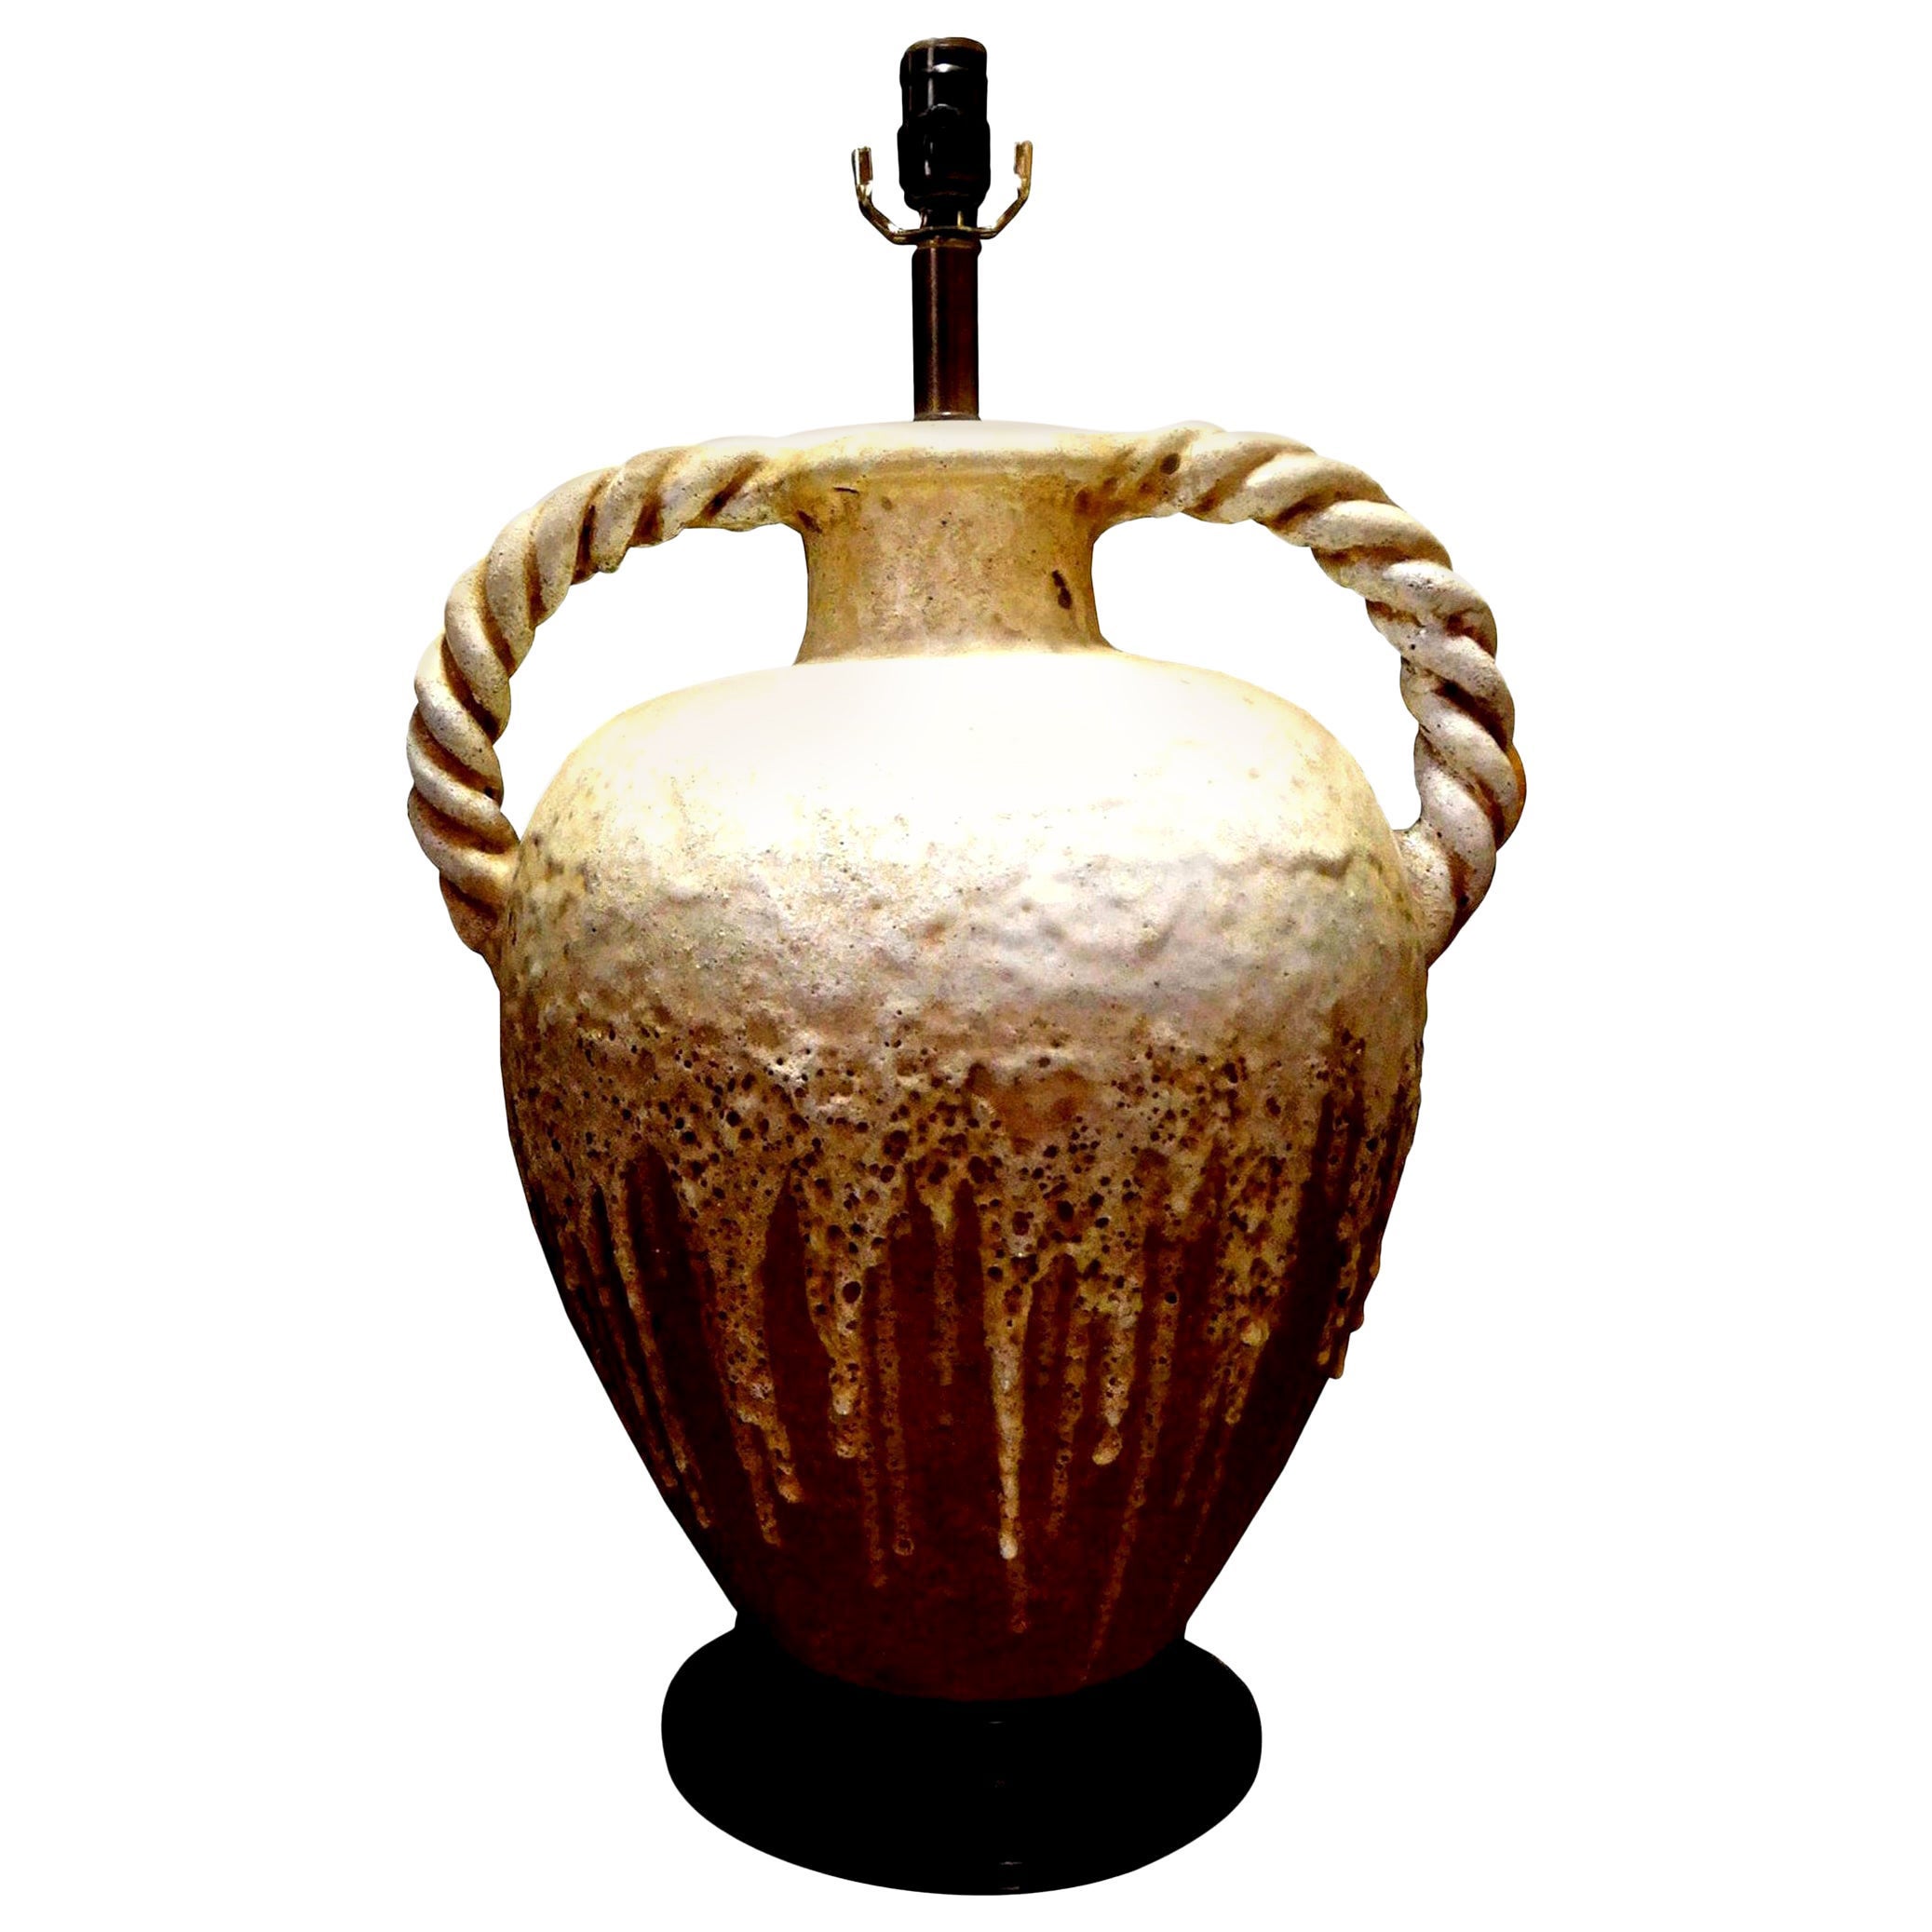 Große italienische Tropfglasur-Keramiklampe mit gedrehten Griffen, Fantoni zugeschrieben